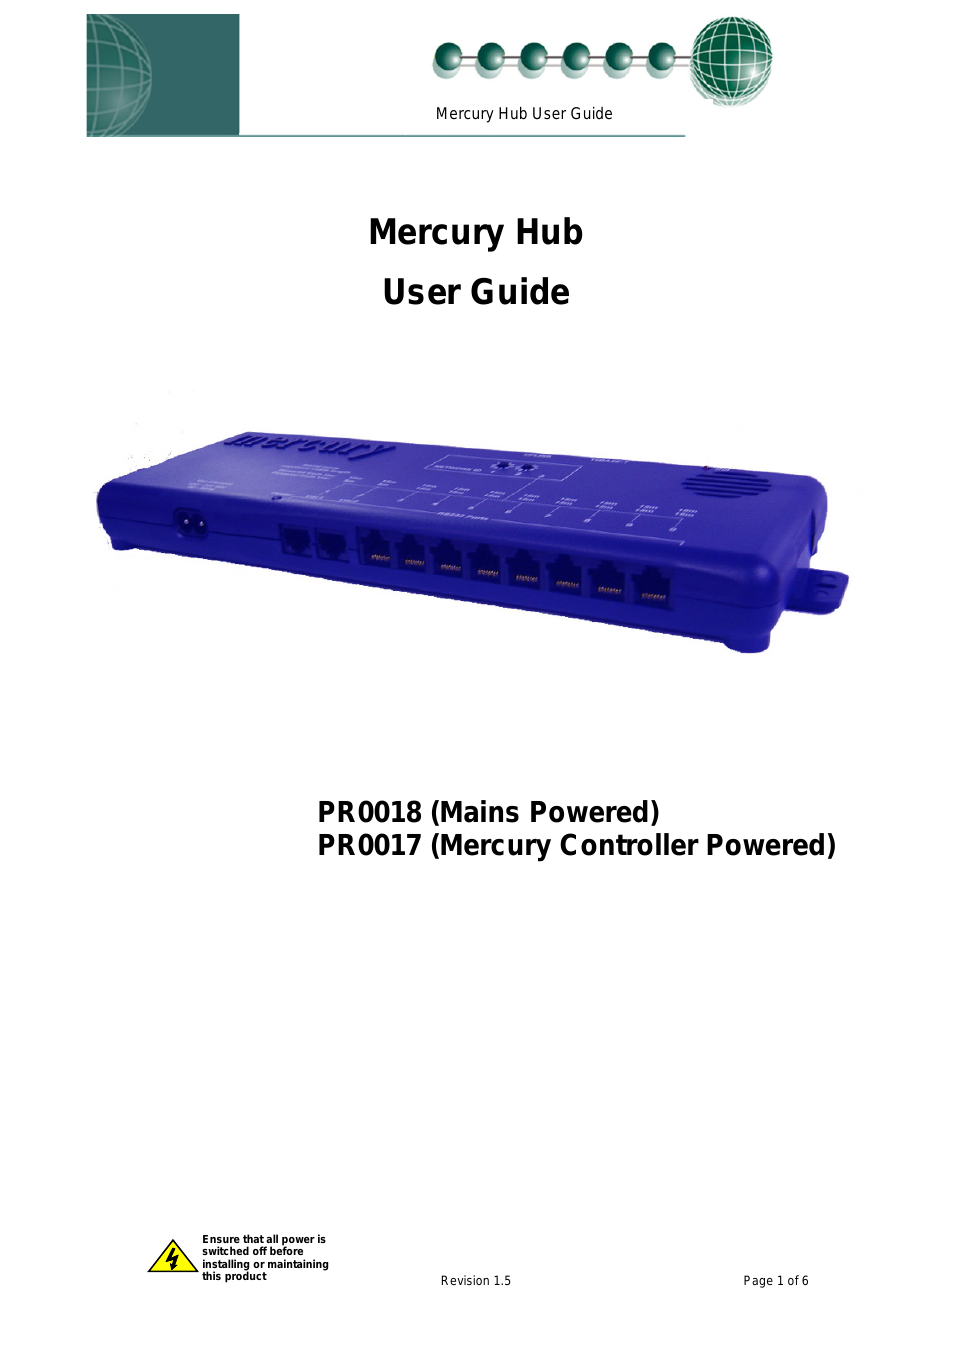 Mercury Hub PR0017